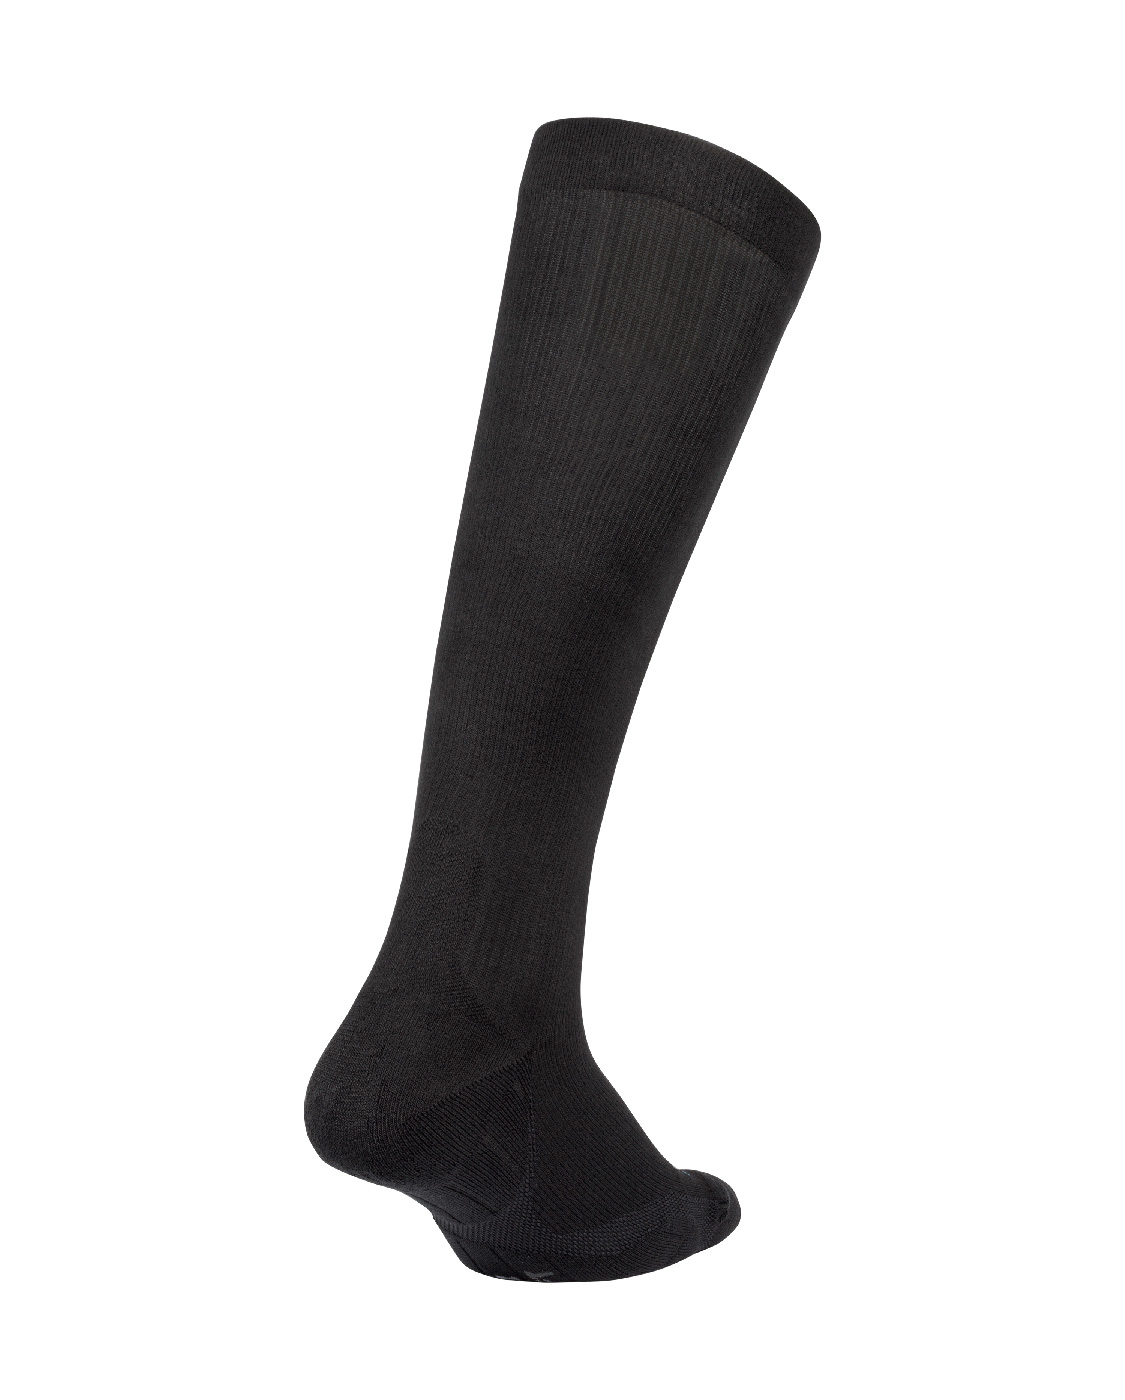 2XU Unisex 24/7 Compression Socks - Black/Black